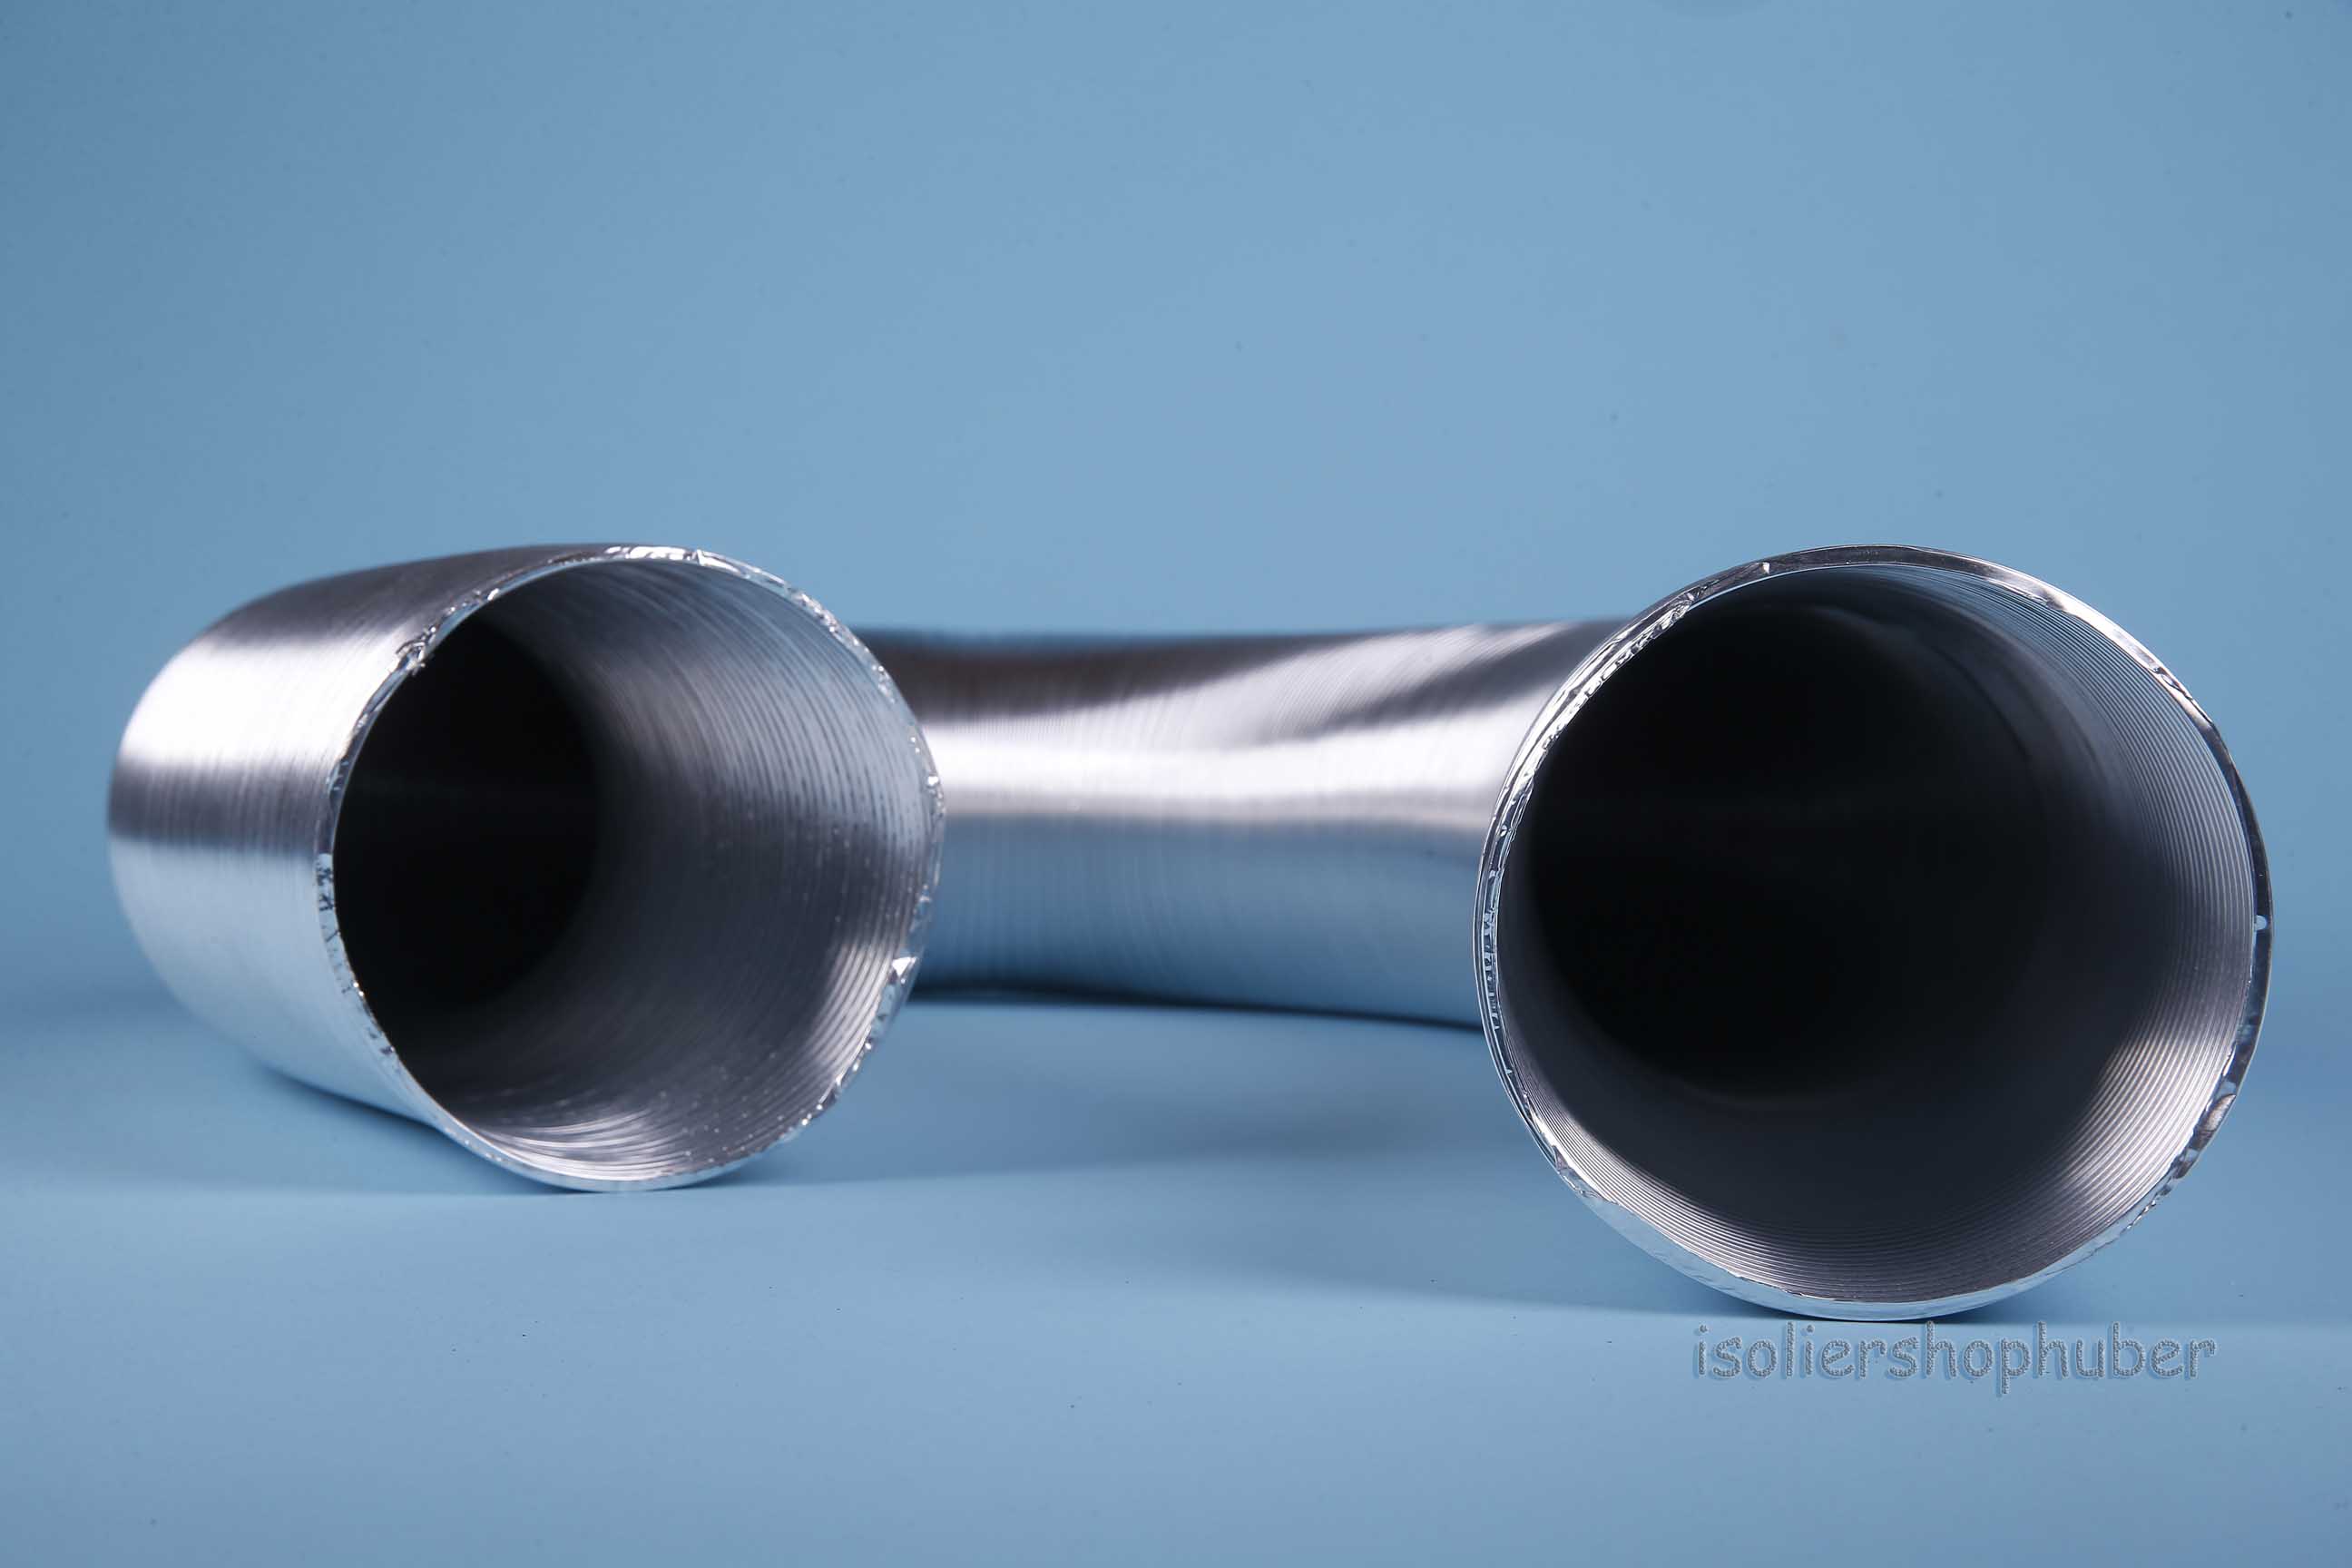 Isoliershophuber - 50 mm Aluminium-Flexrohr, gestauchtes